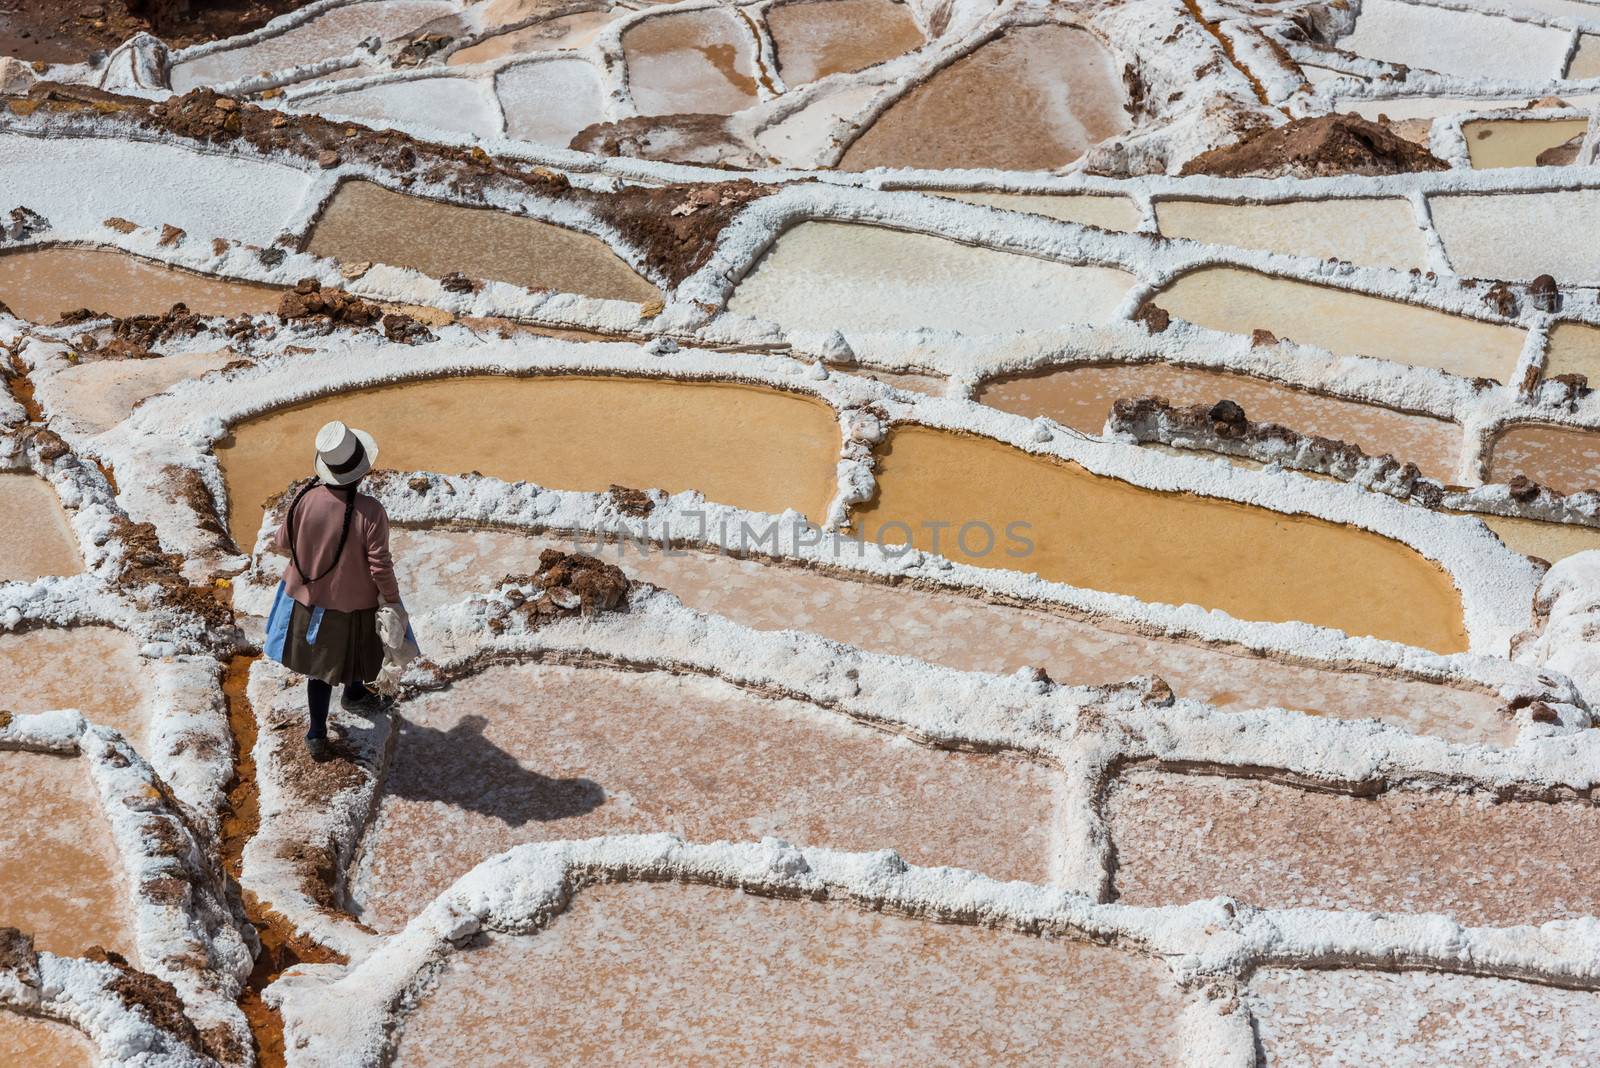 Maras salt mines peruvian Andes  Cuzco Peru by PIXSTILL